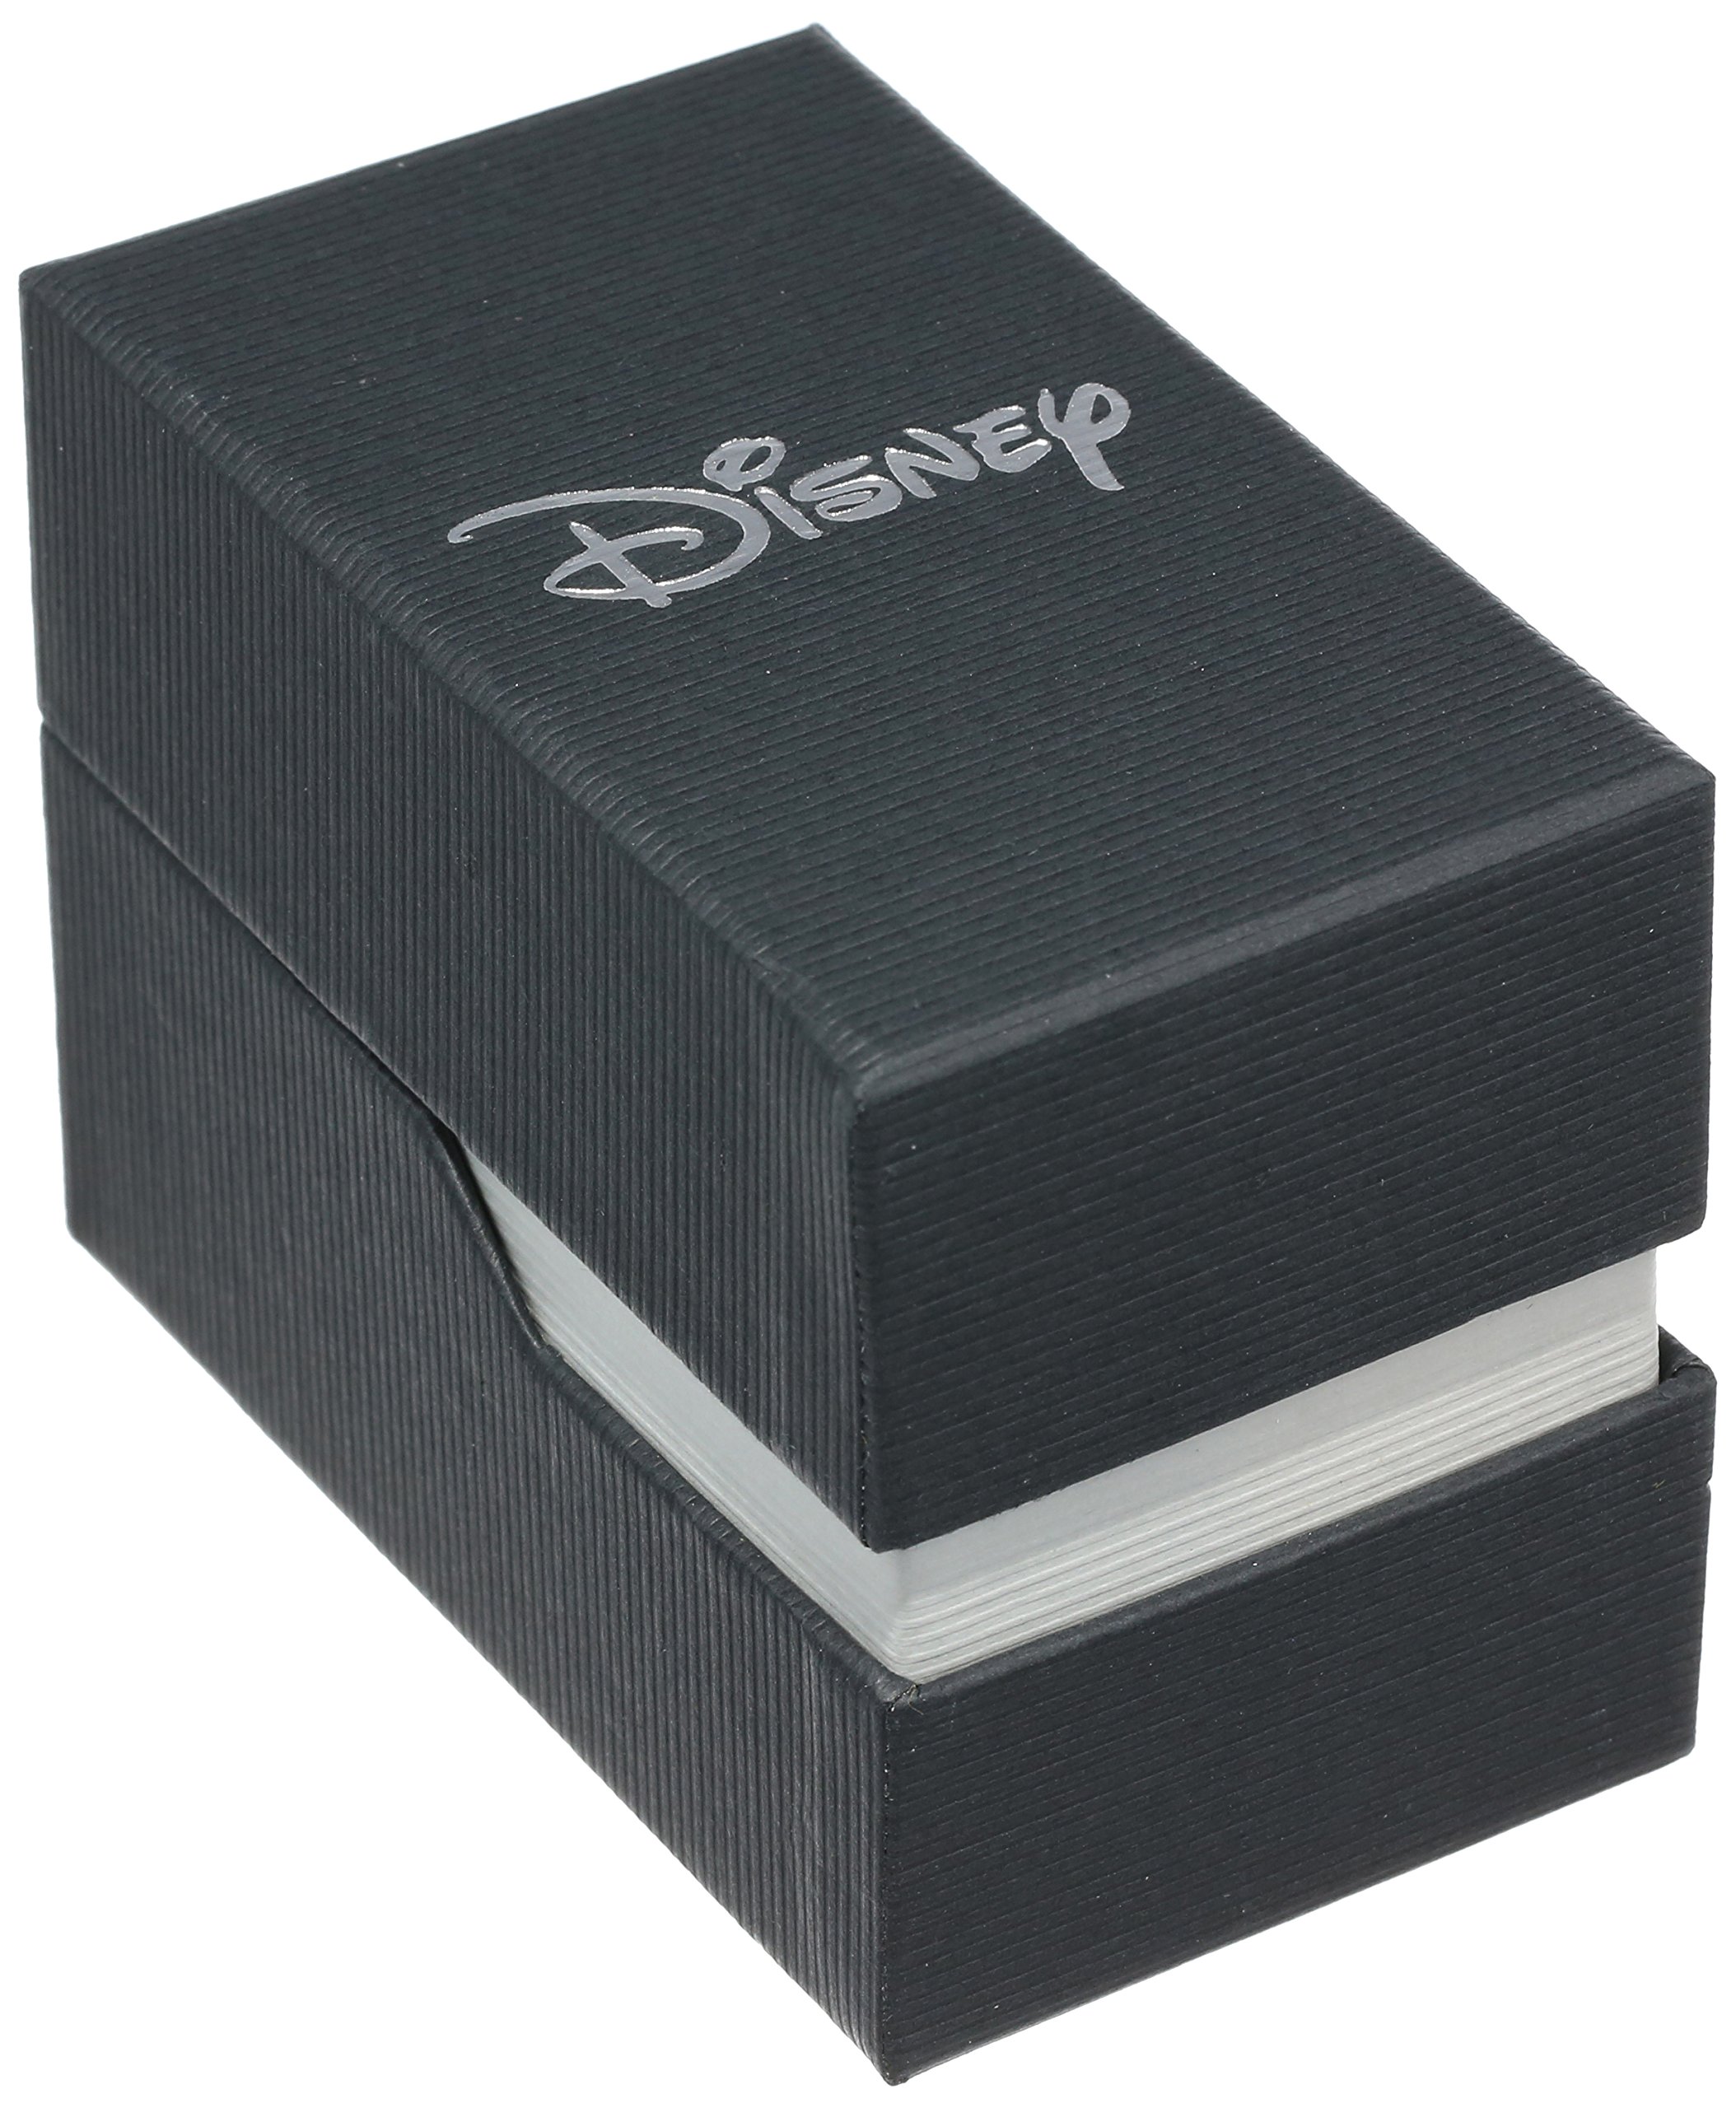 Disney Mickey Mouse Adult Fortaleza Bracelet Analog Quartz Watch